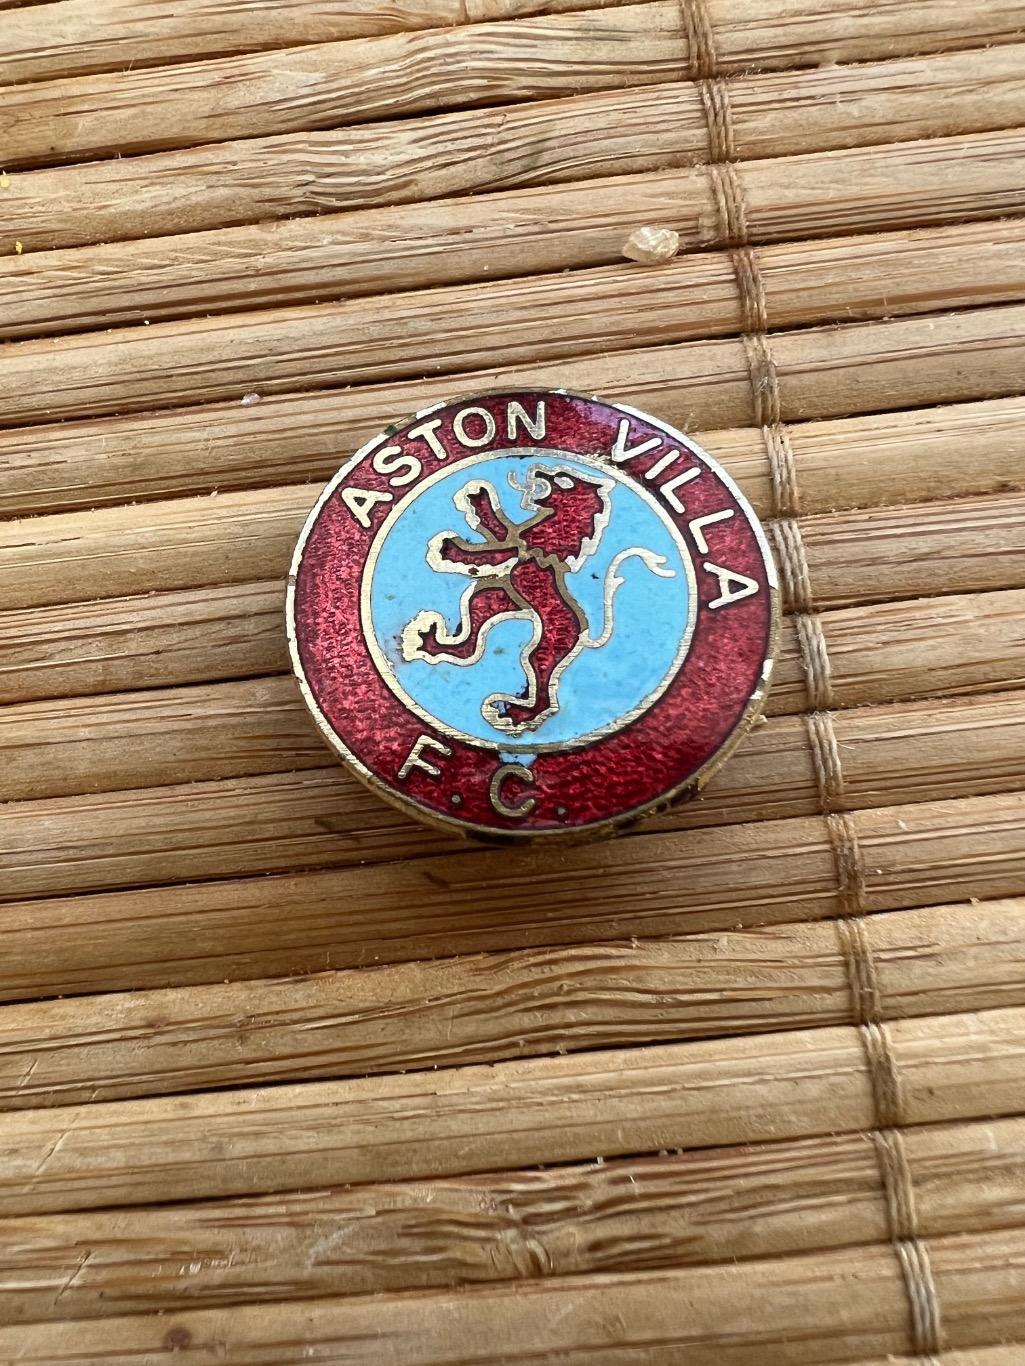 Знак значок ФК Астон Вилла Aston Villa 1980 е Англия